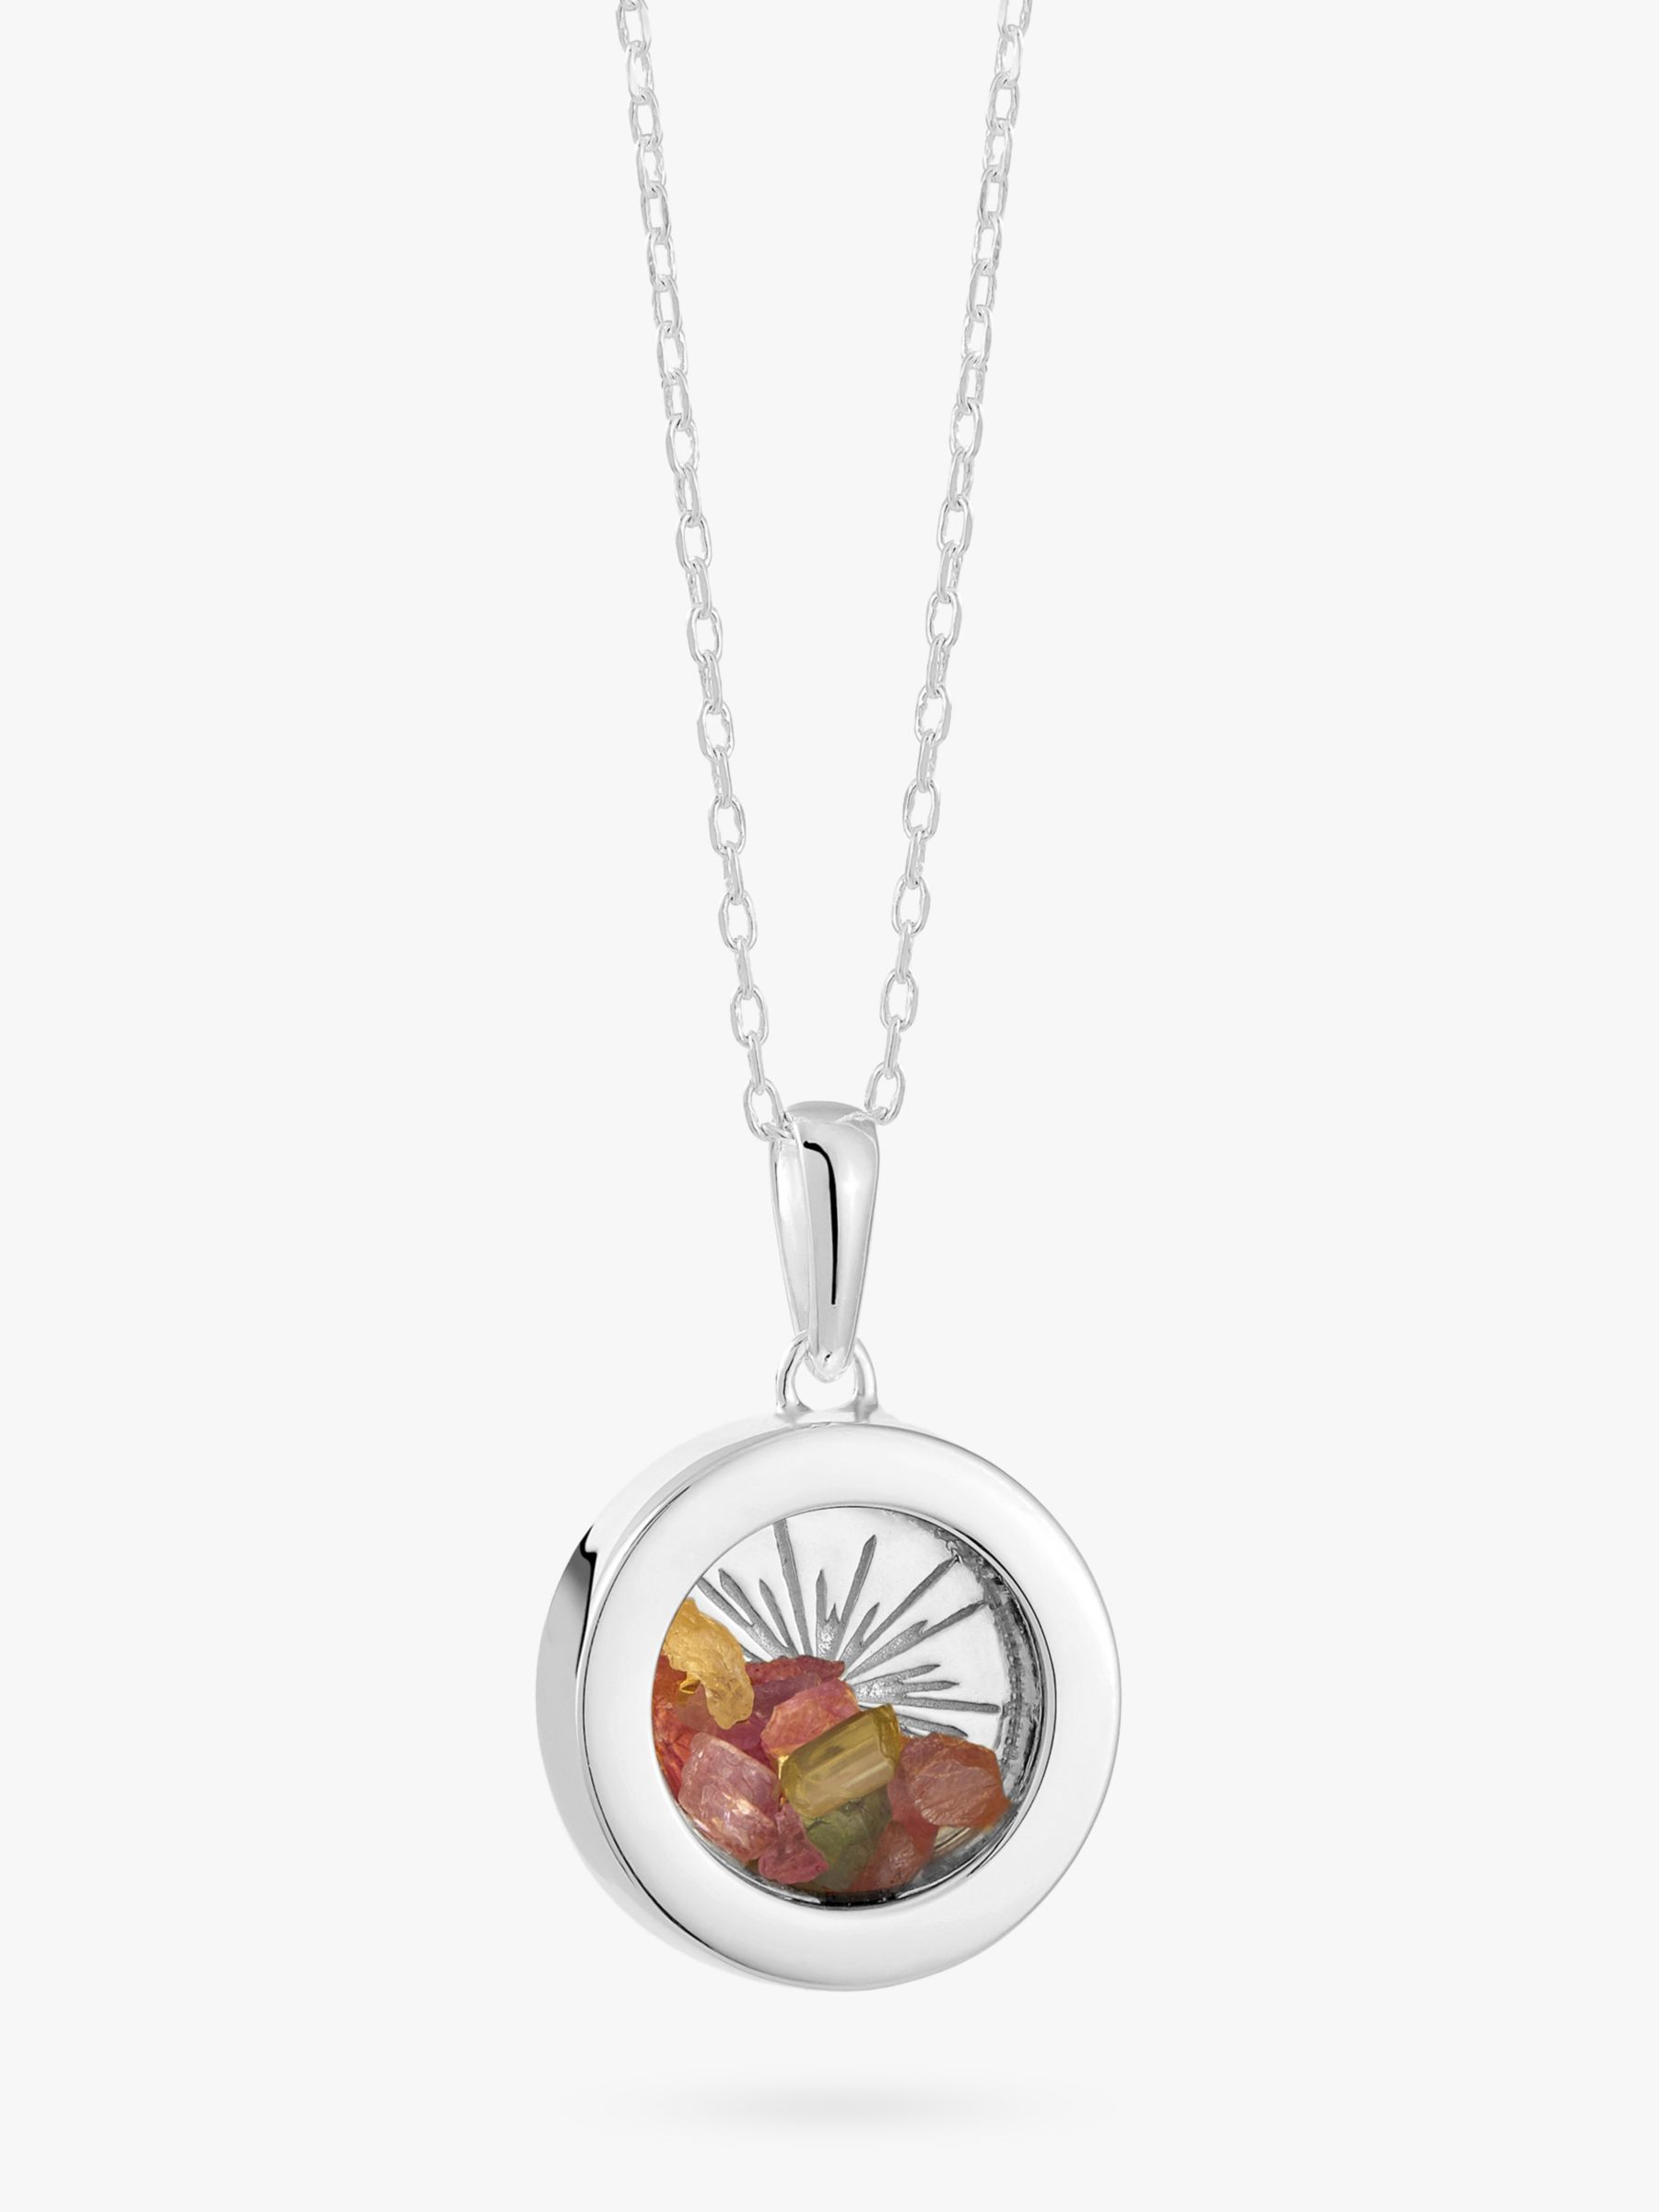 Rachel Jackson London Personalised Small Deco Sun Birthstone Amulet Necklace, Silver, Tourmaline - October